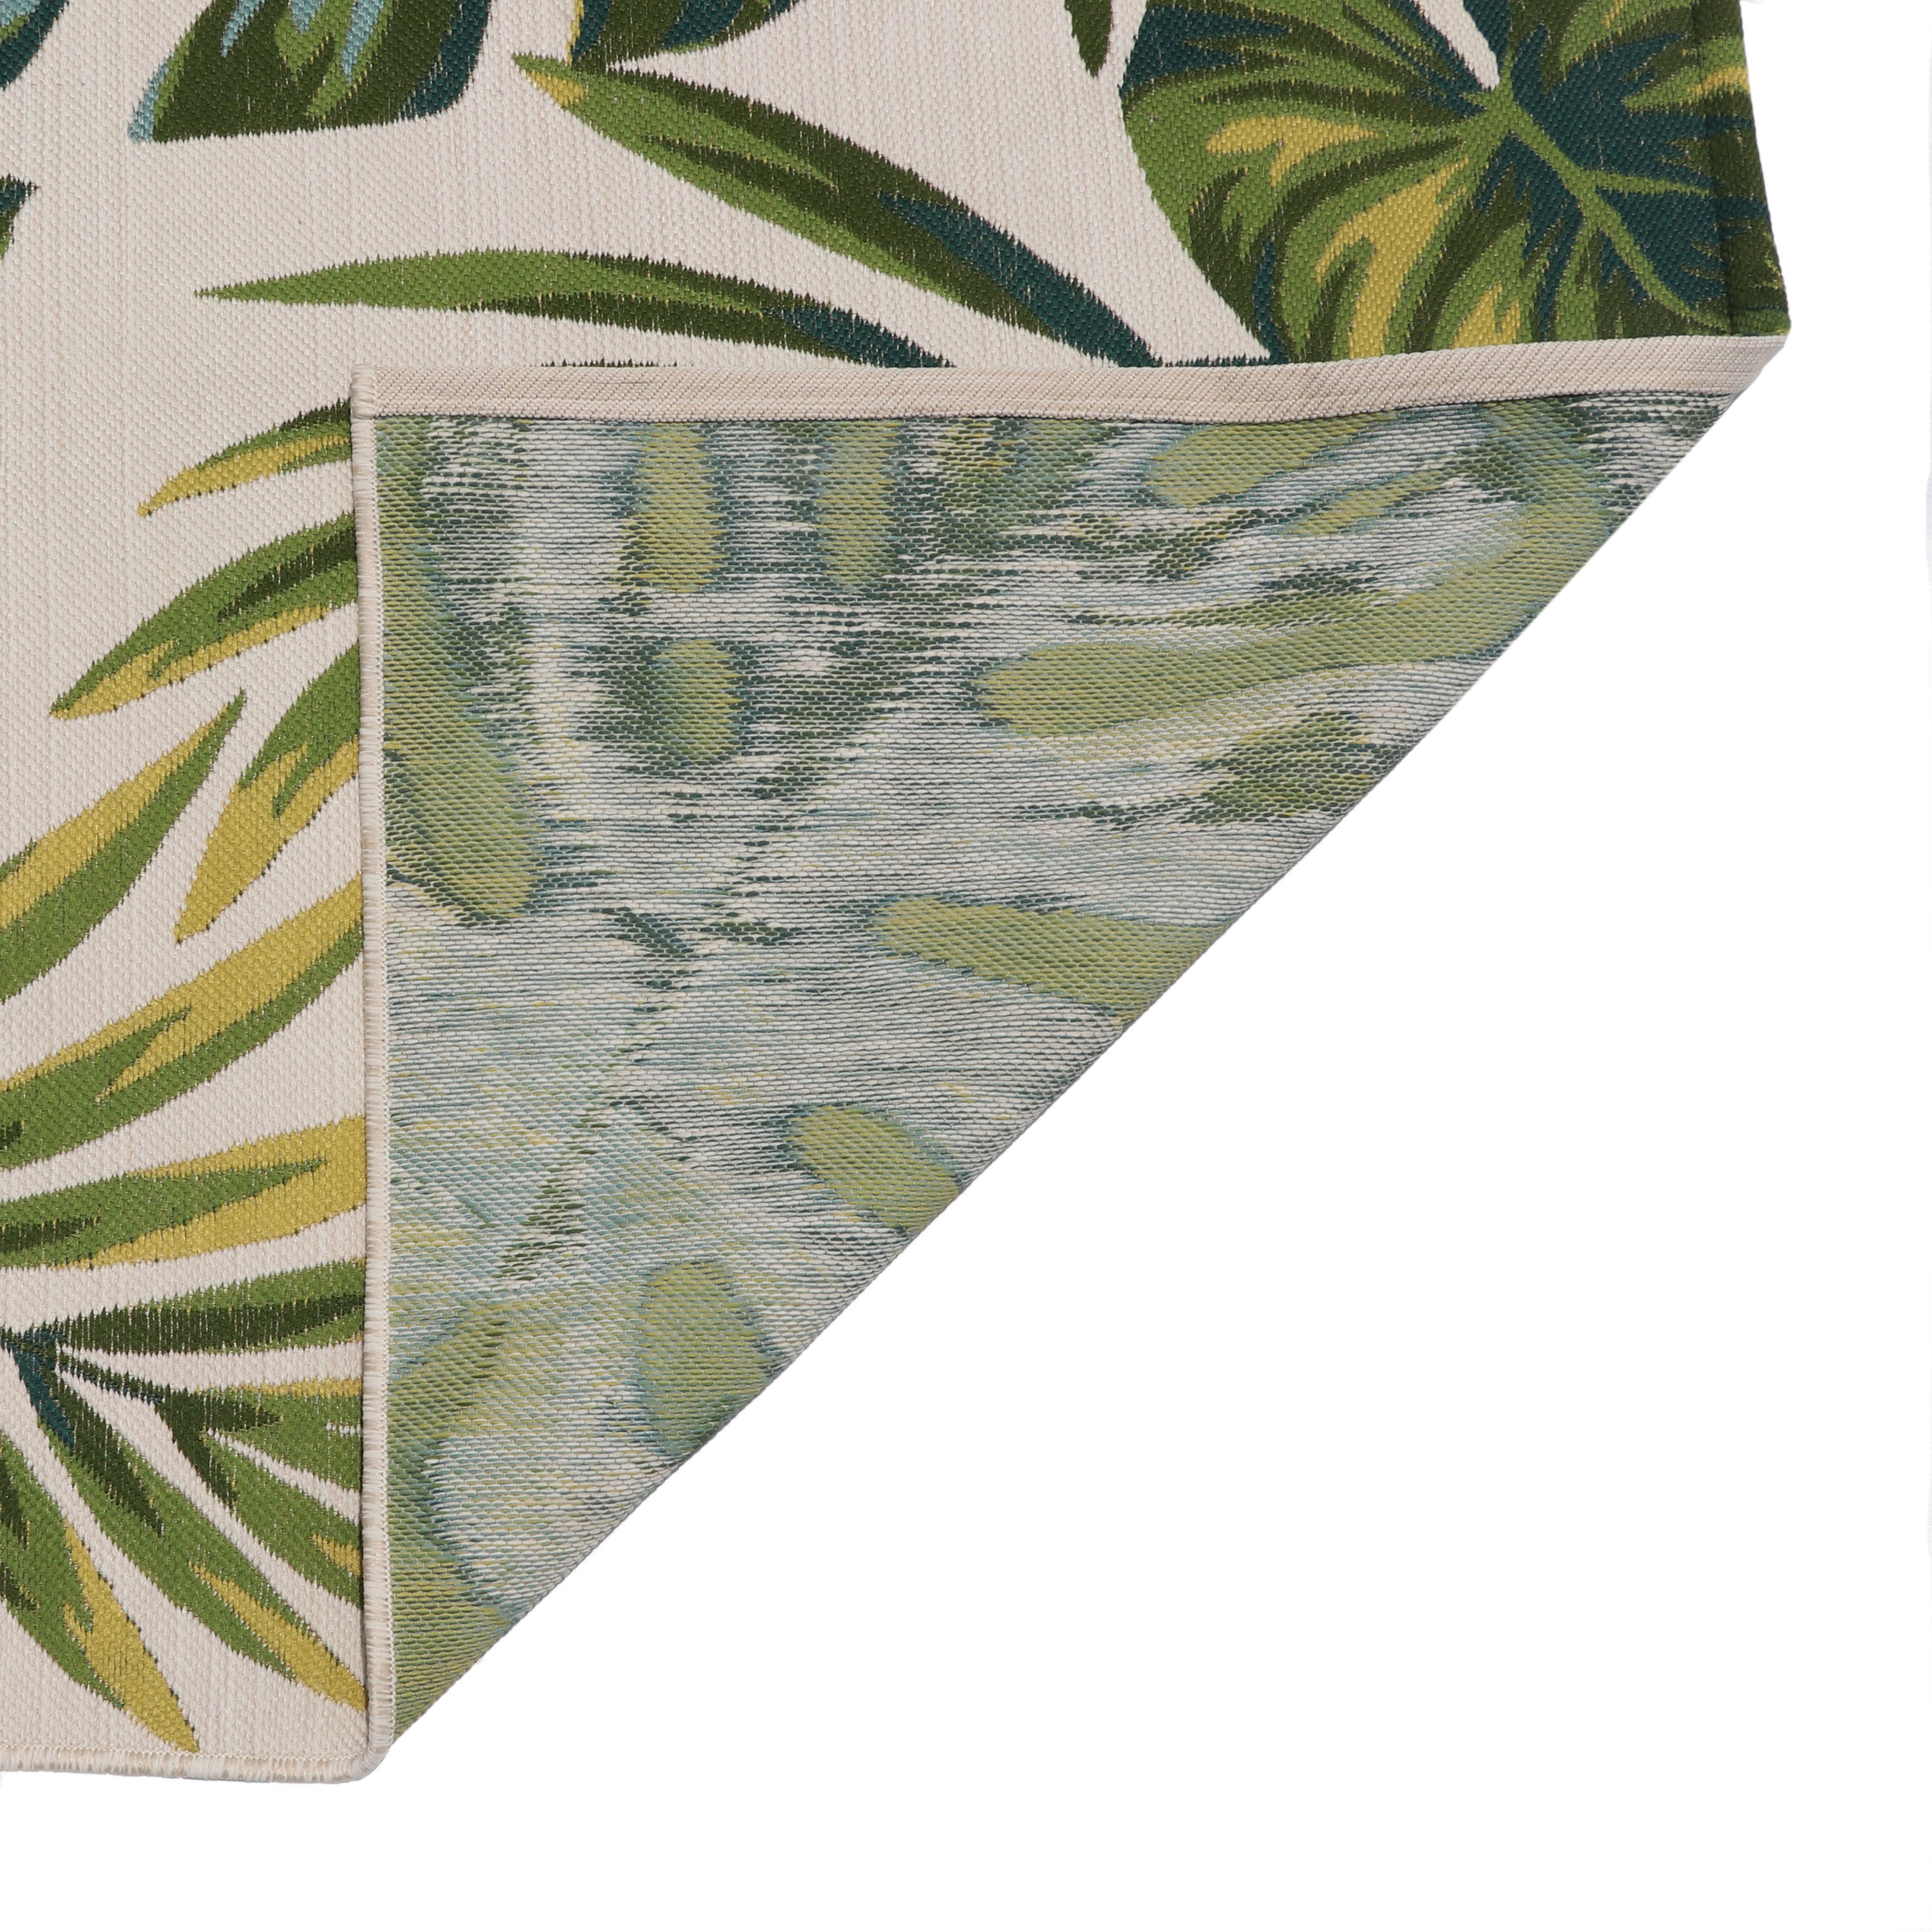 Paco Home Outdoor Rug Ostende Palm Leaf Design Waterproof - Beige Green 5'3 x 7'7